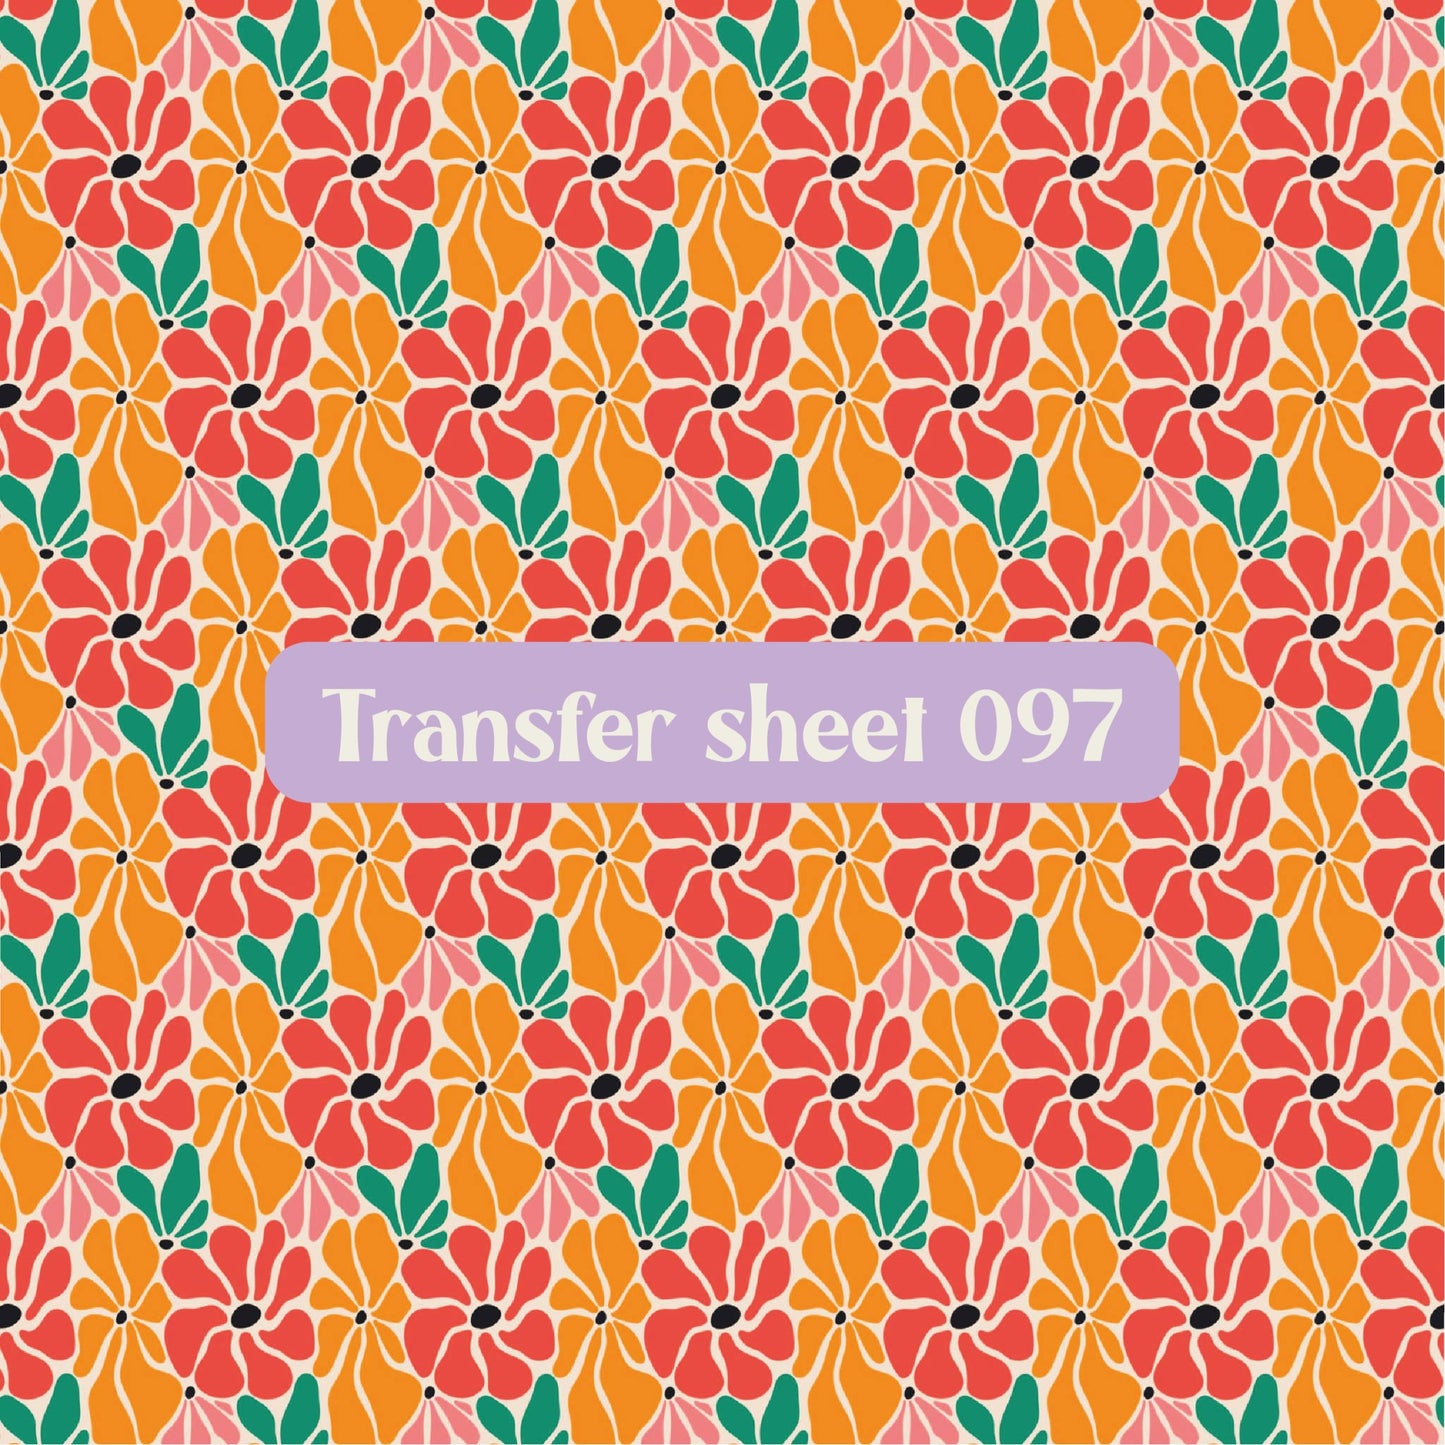 Transfer sheet 097 - Transfer paper - CLN Atelier